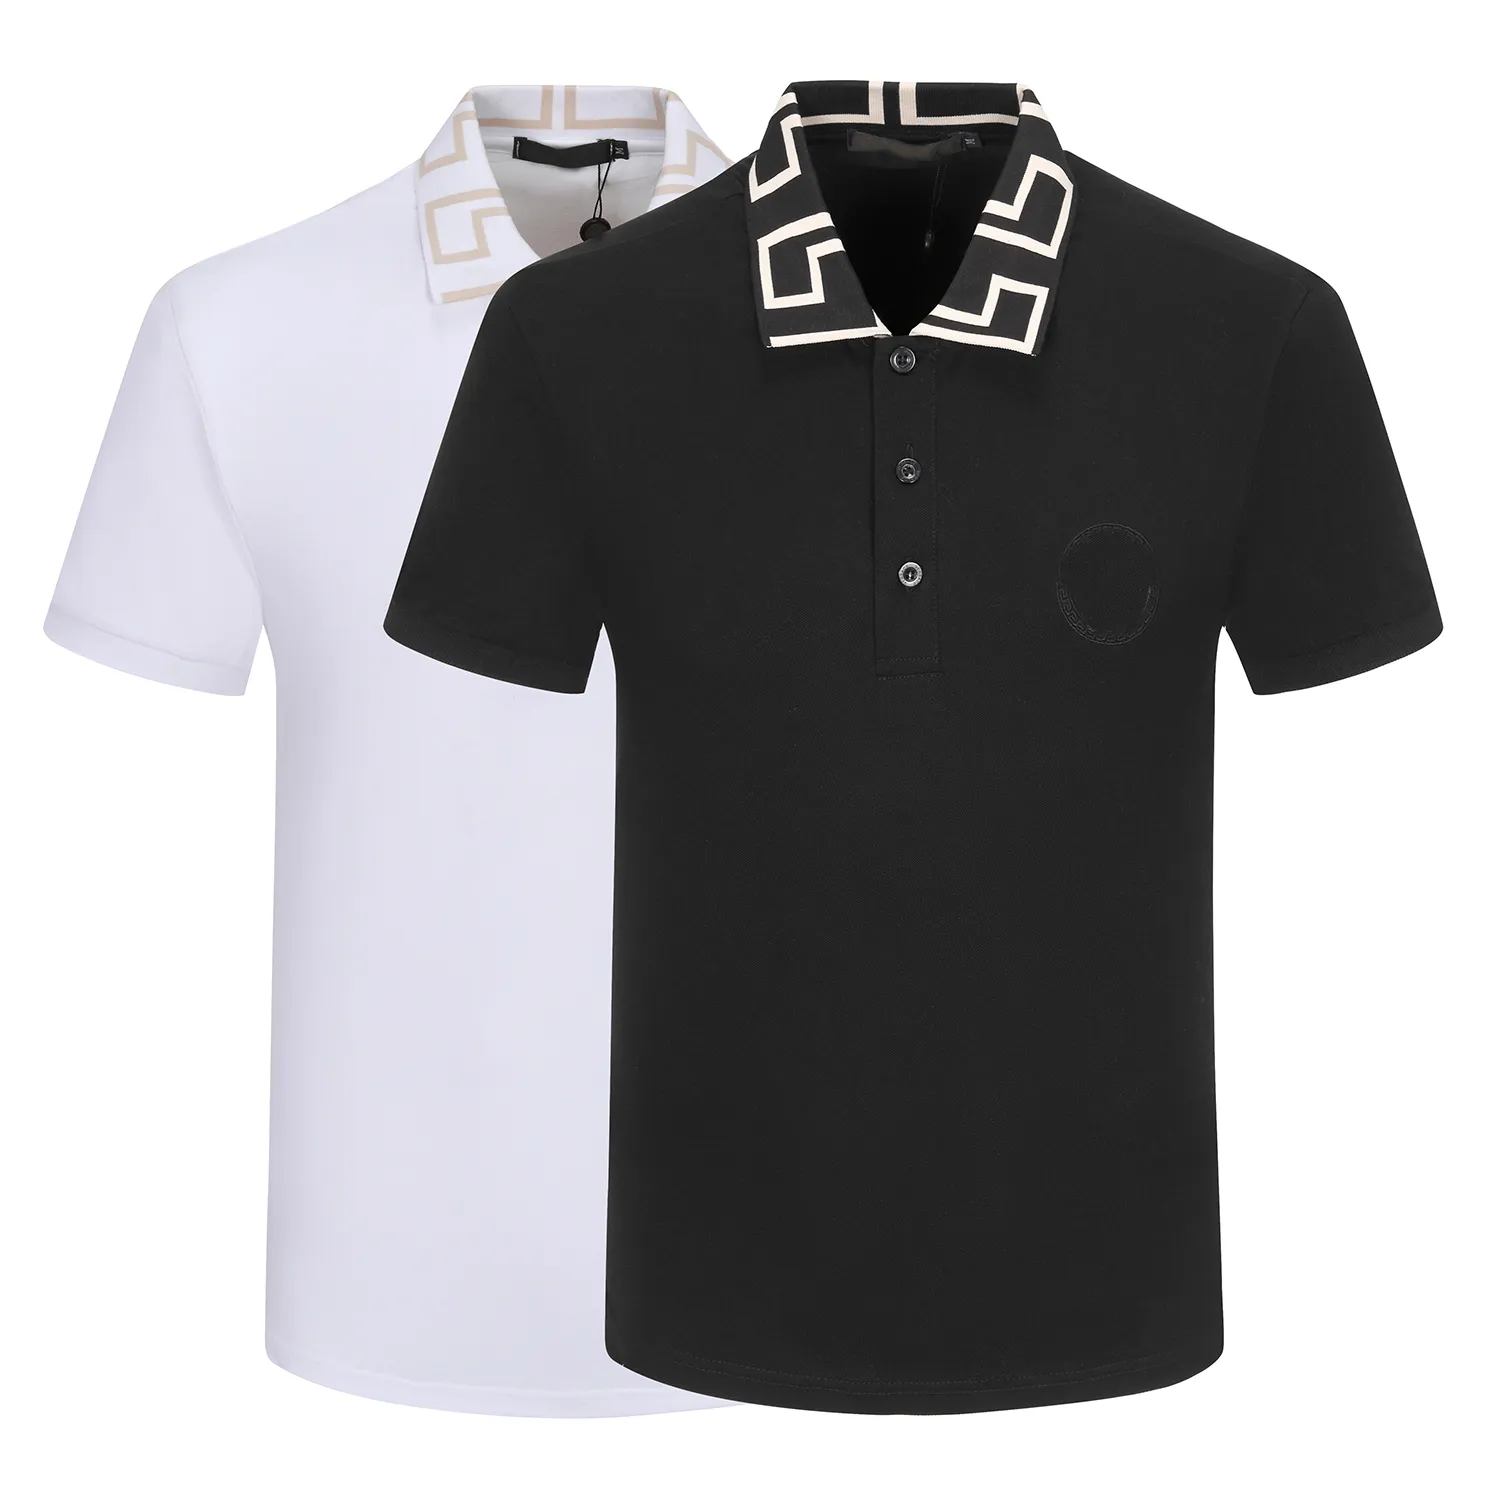 highend brand paul shortsleeved tshirt men bee polo shirt 100 lapel business korean summer embroidery mens clothing